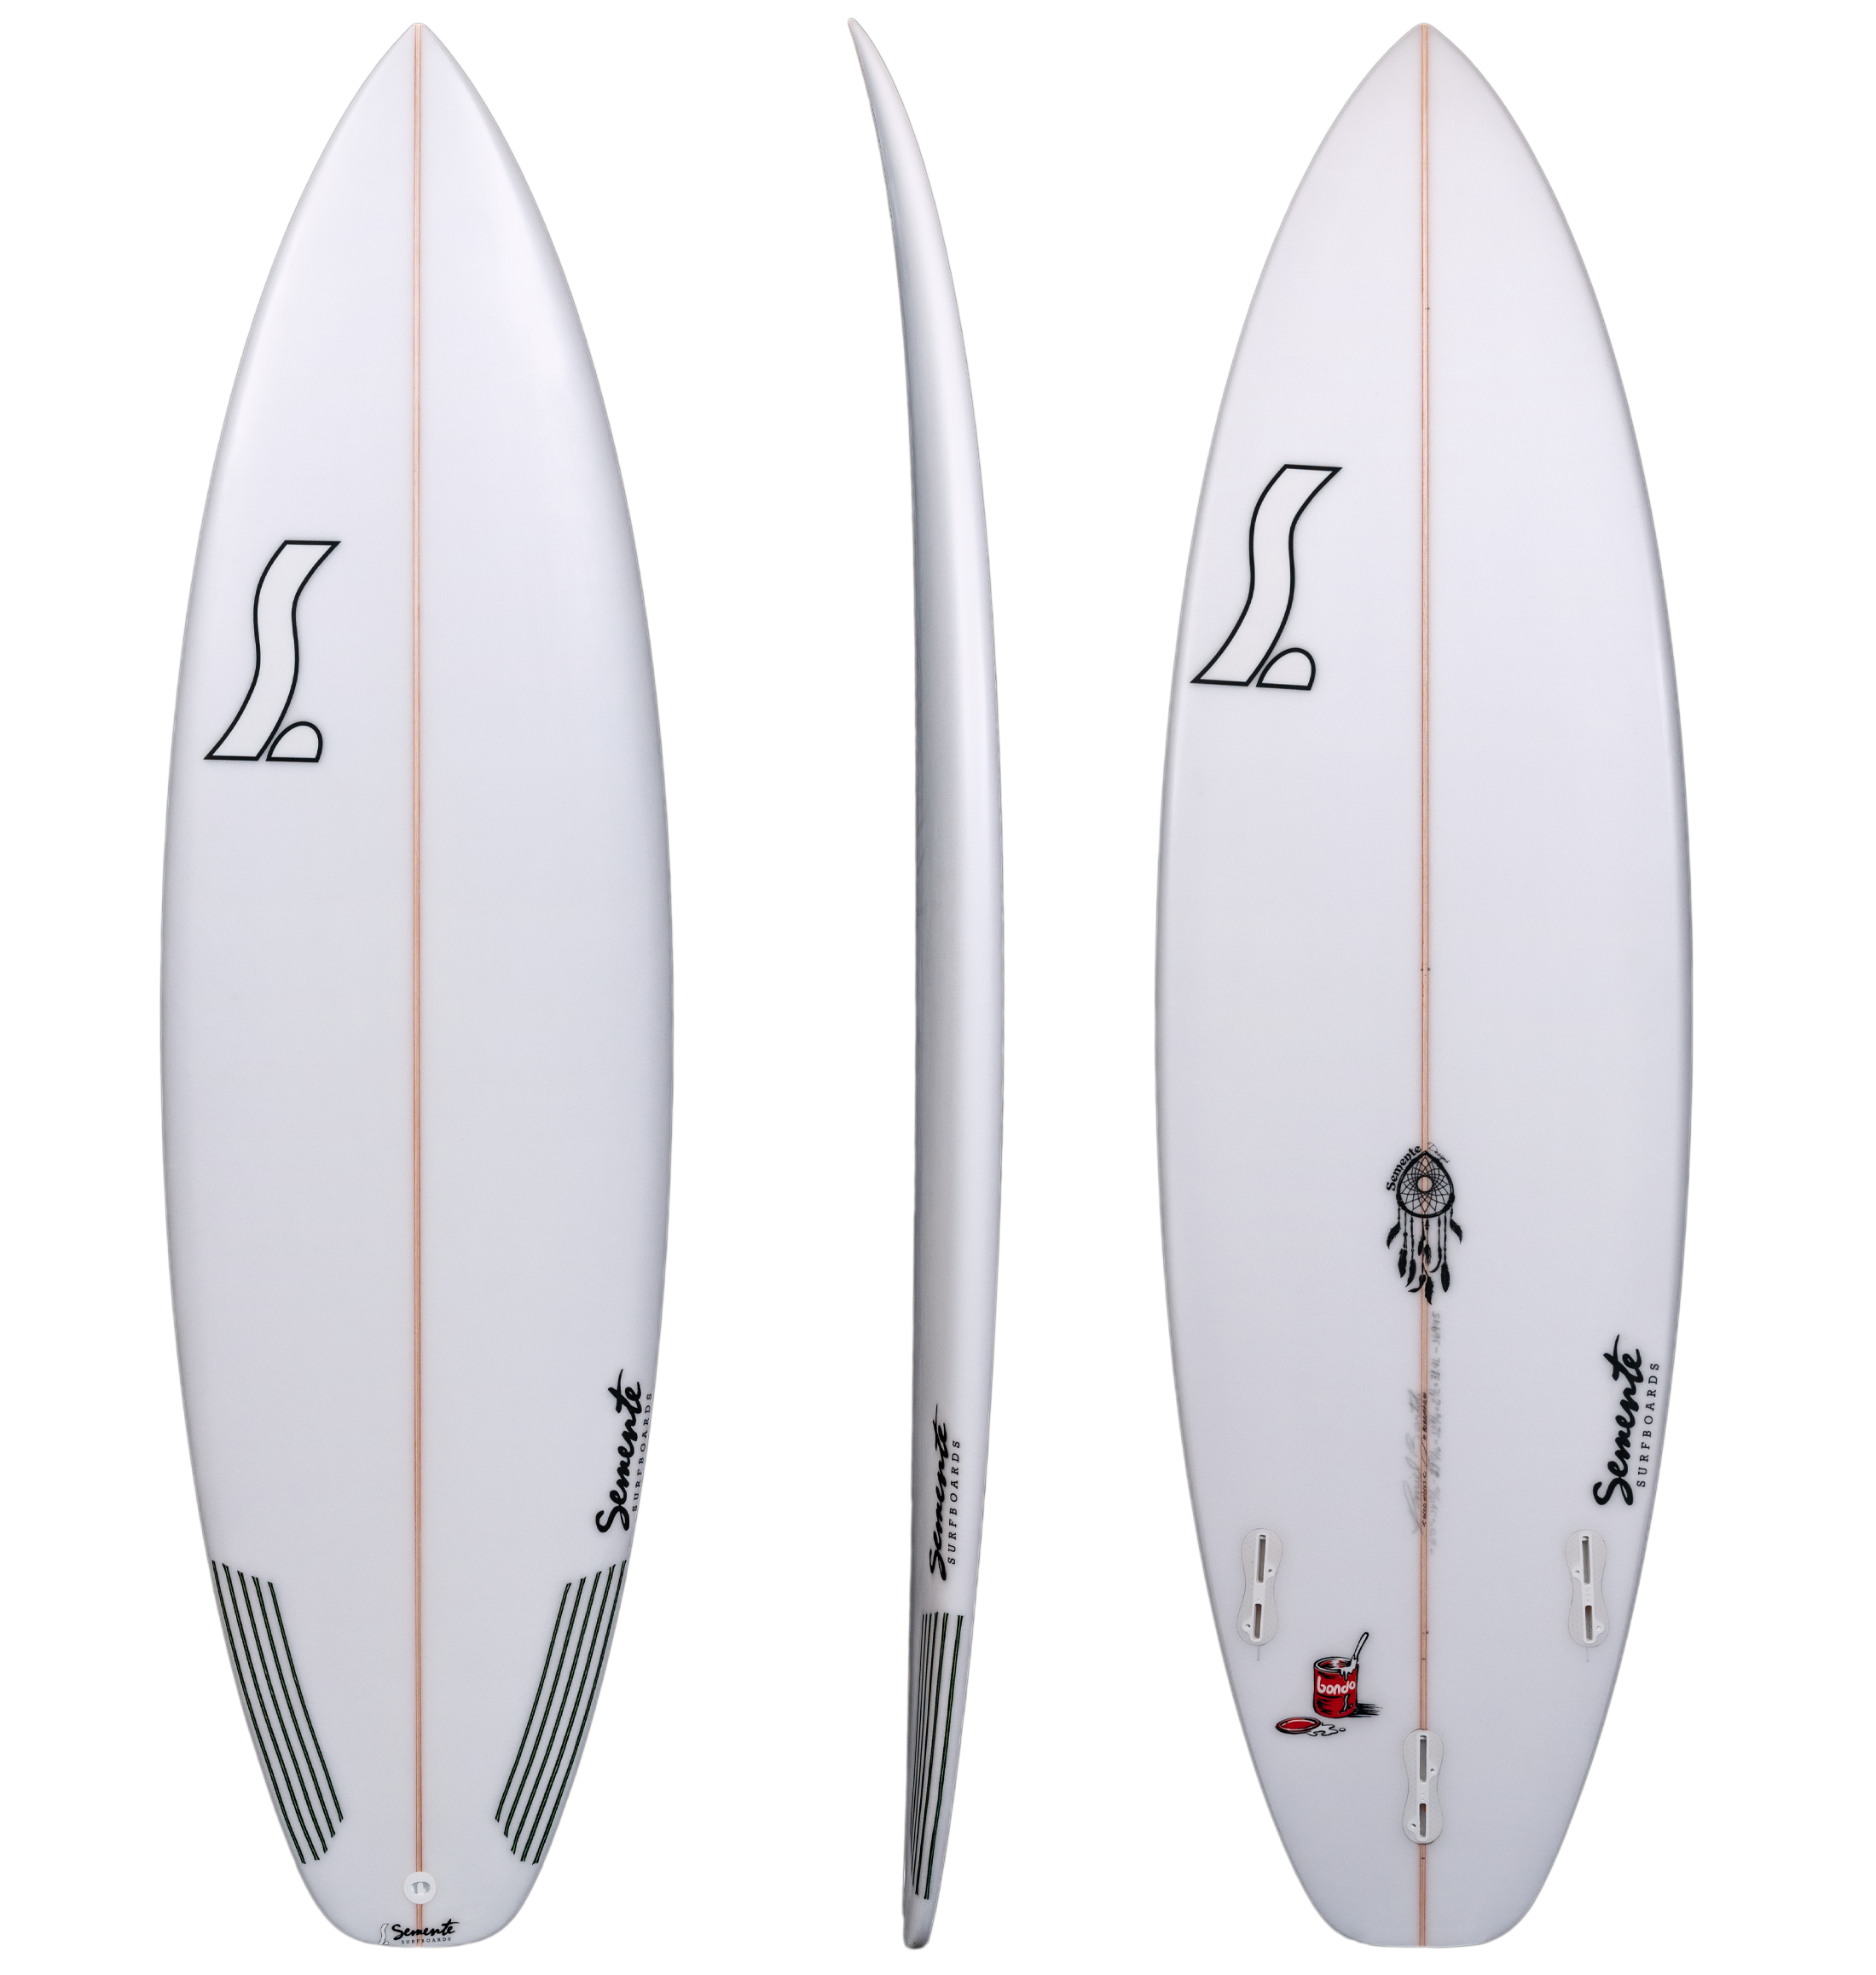 Bondo surfboard model